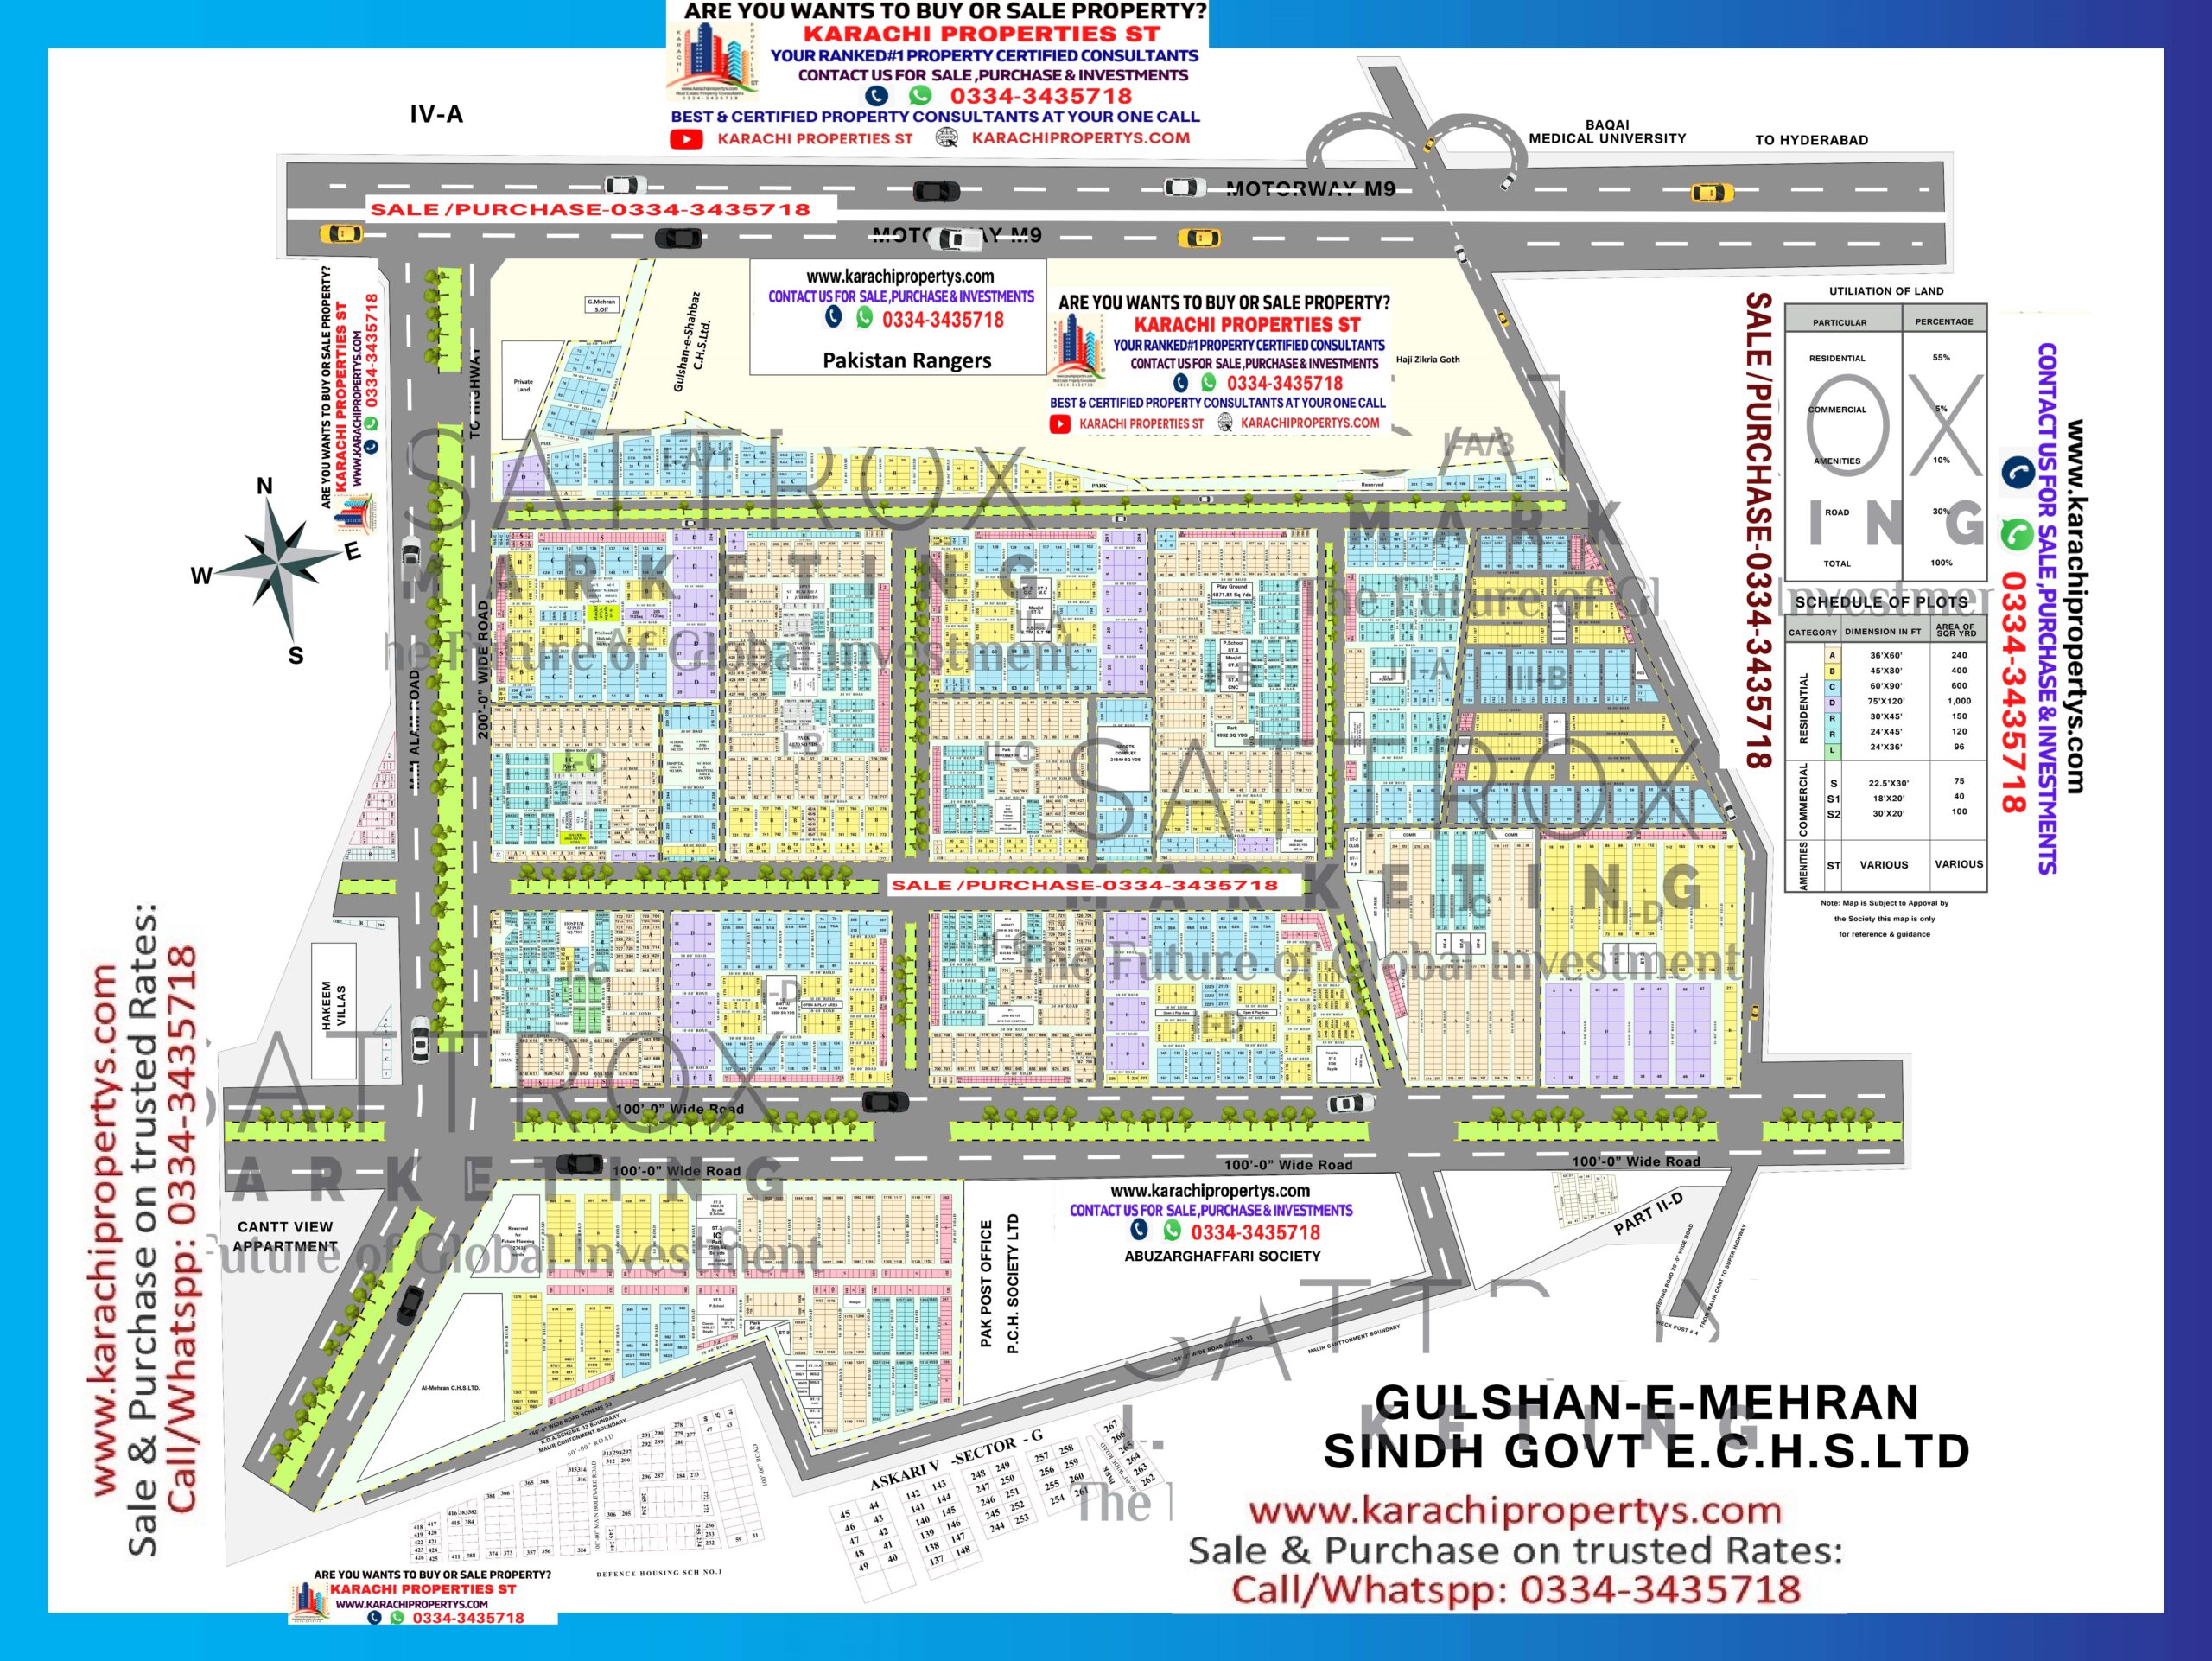 #Gulshan-e-mehran new map